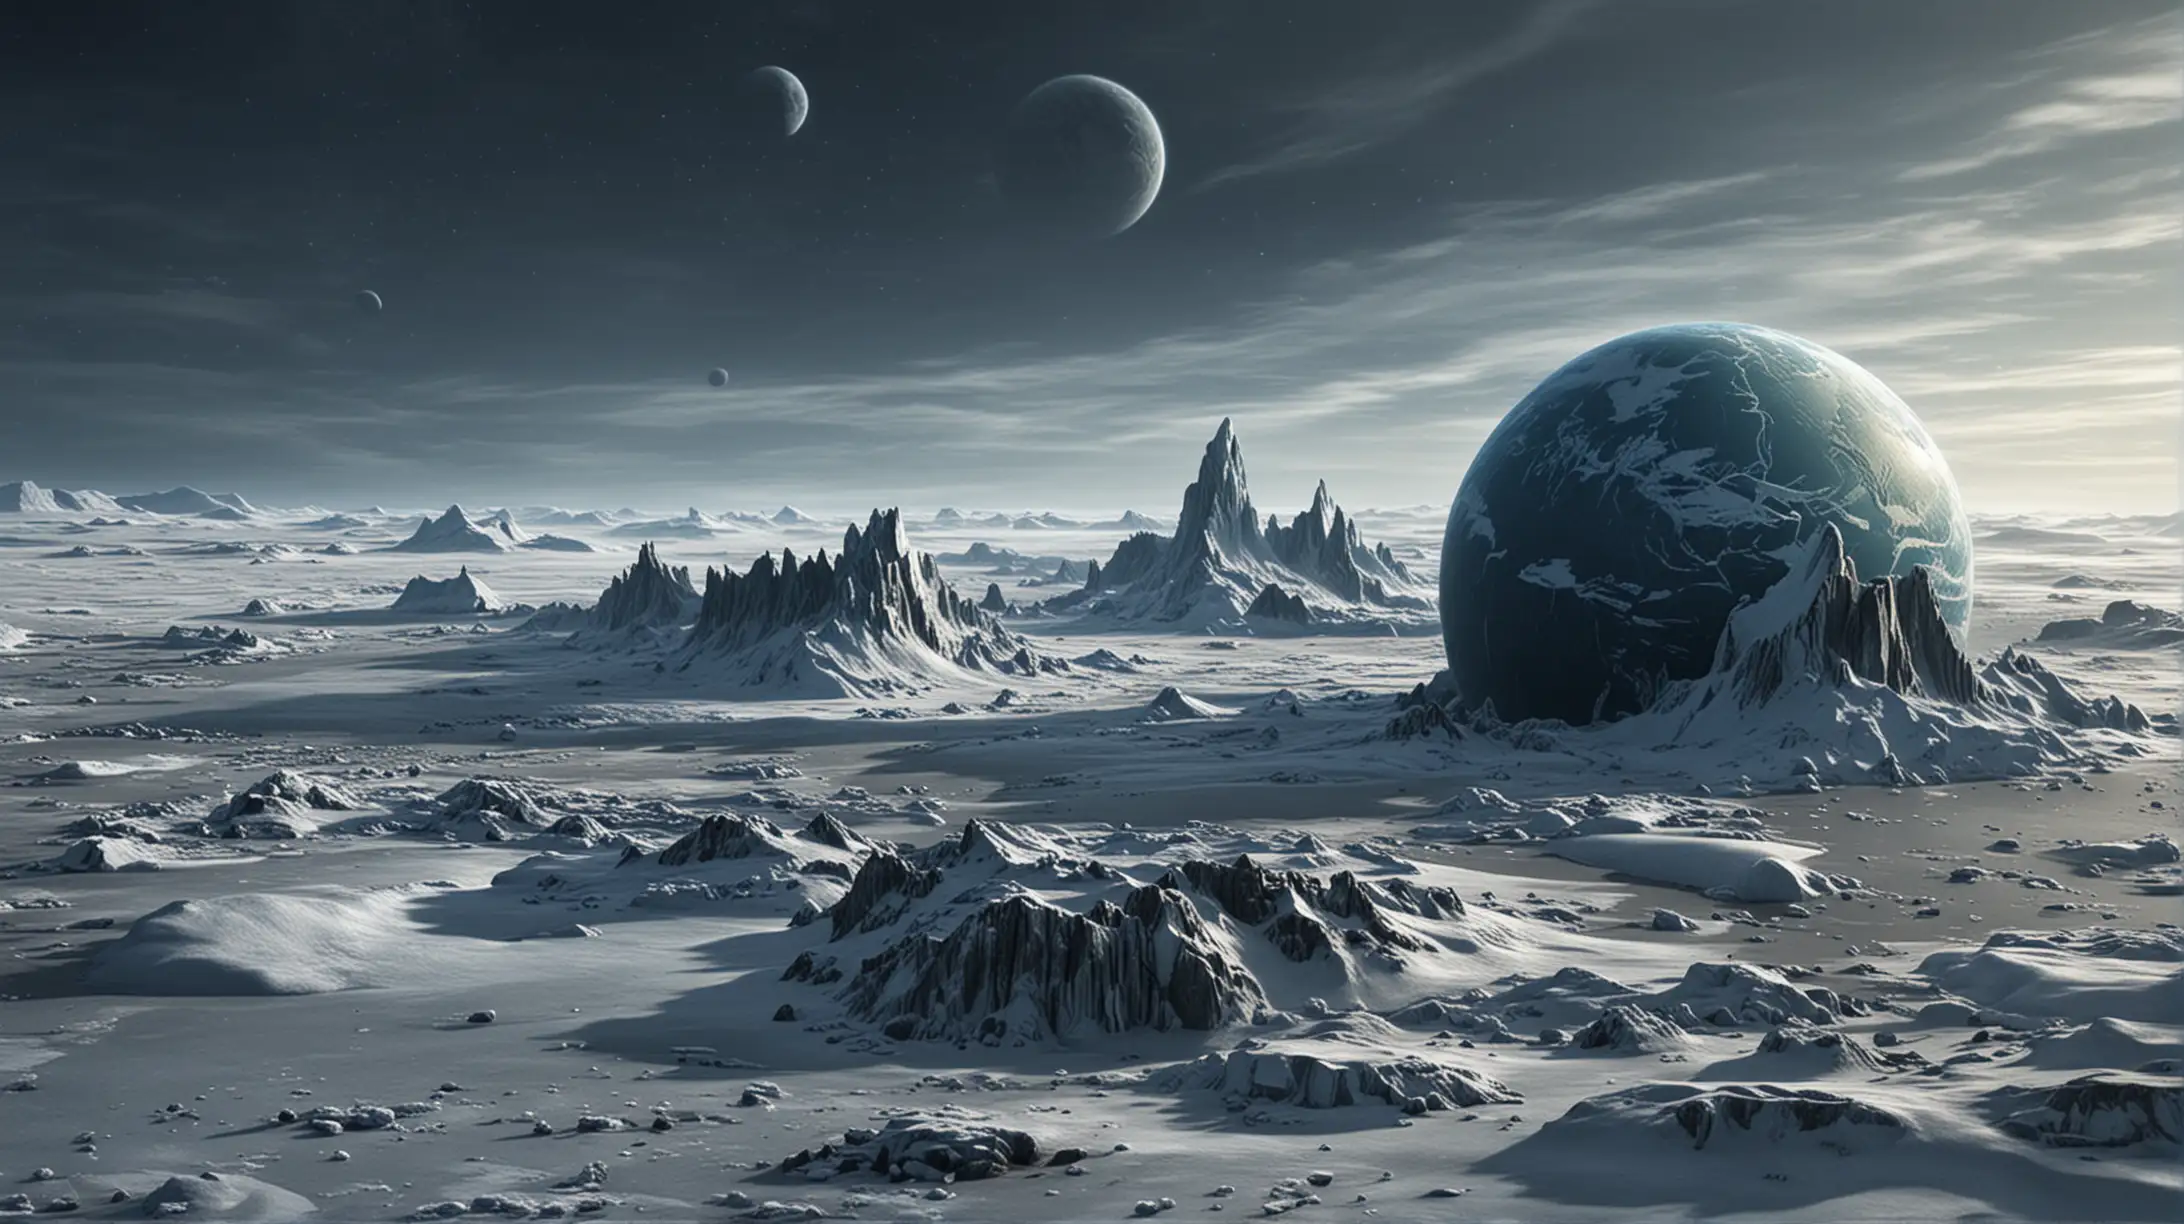 frozen planet with habitable equator